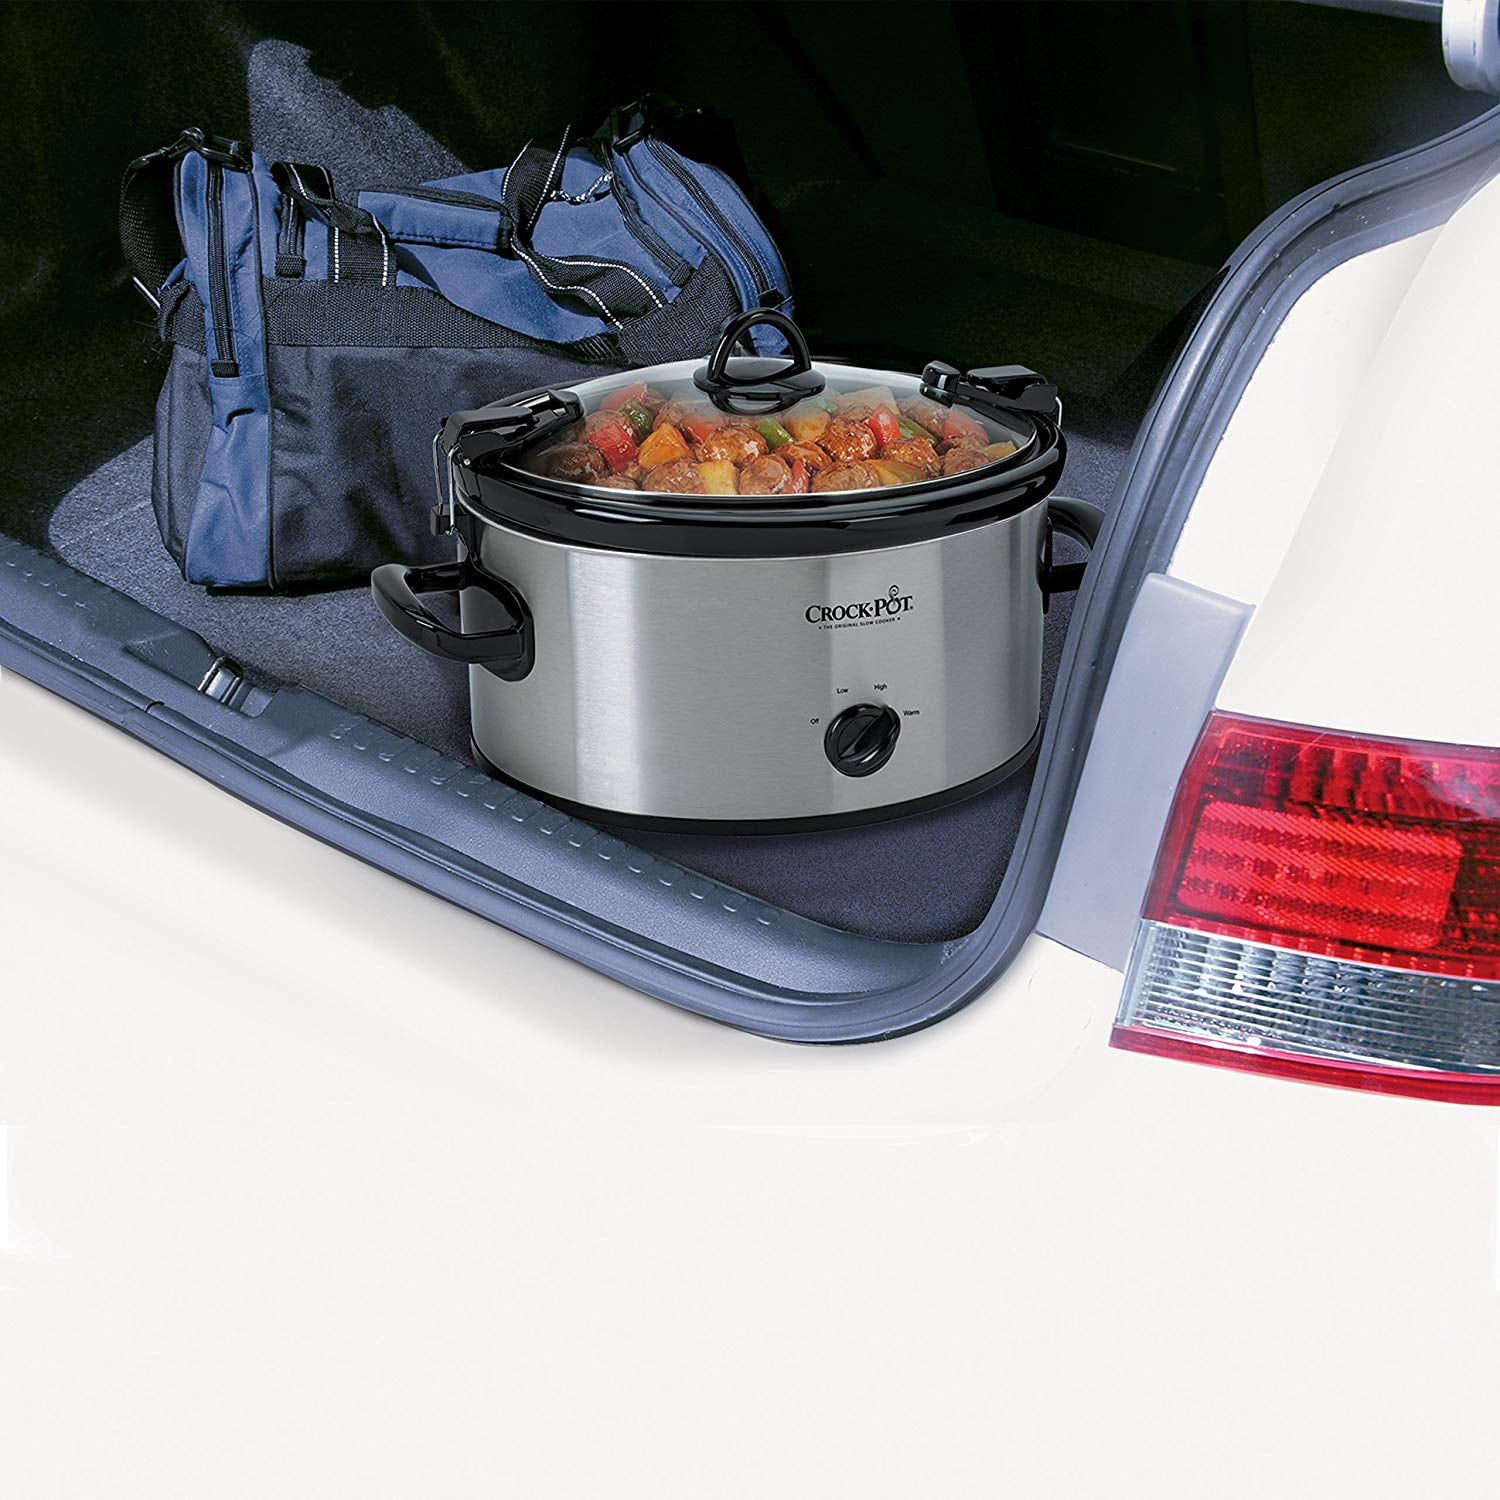 Crock-Pot 6-Quart Cook & Carry Oval Manual Portable Slow Cooker, Red -  SCCPVL600-R